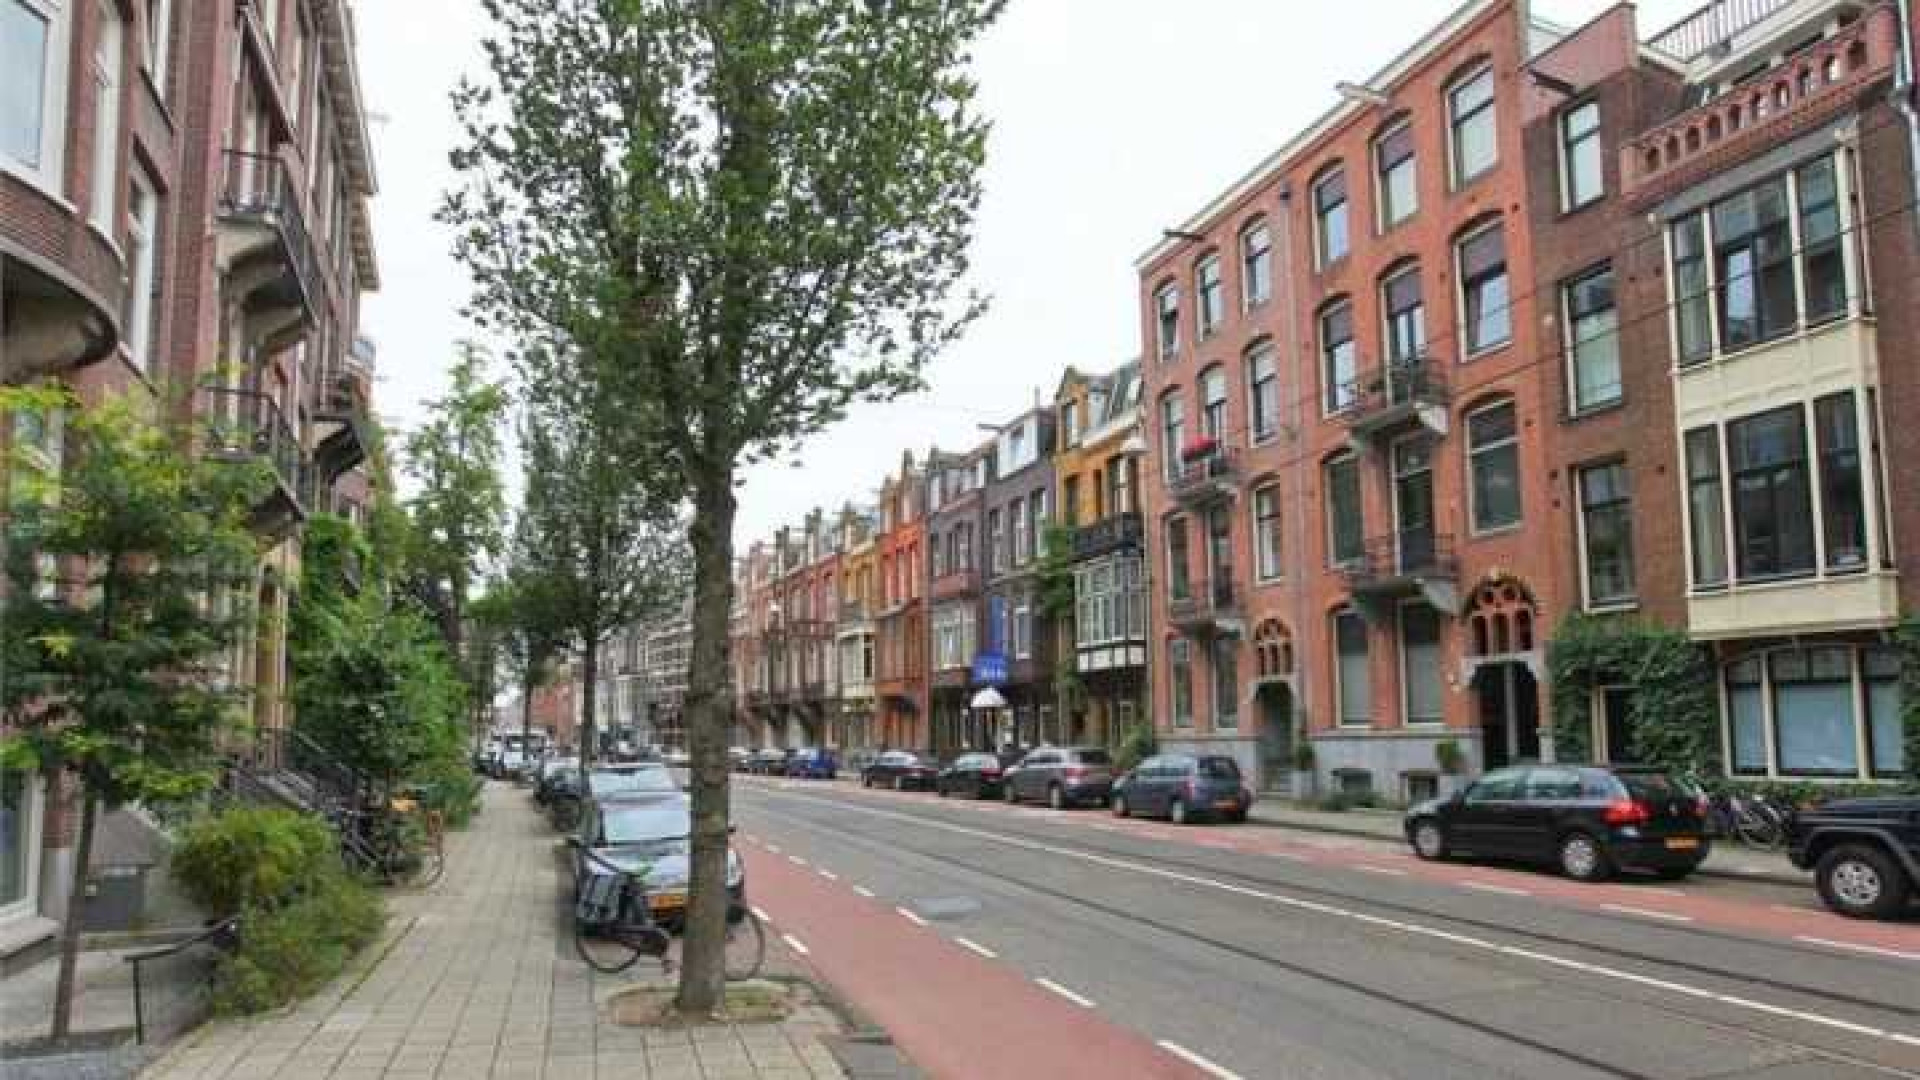 Caro Emerald koopt statig pand in Amsterdam Zuid. Zie foto's 1